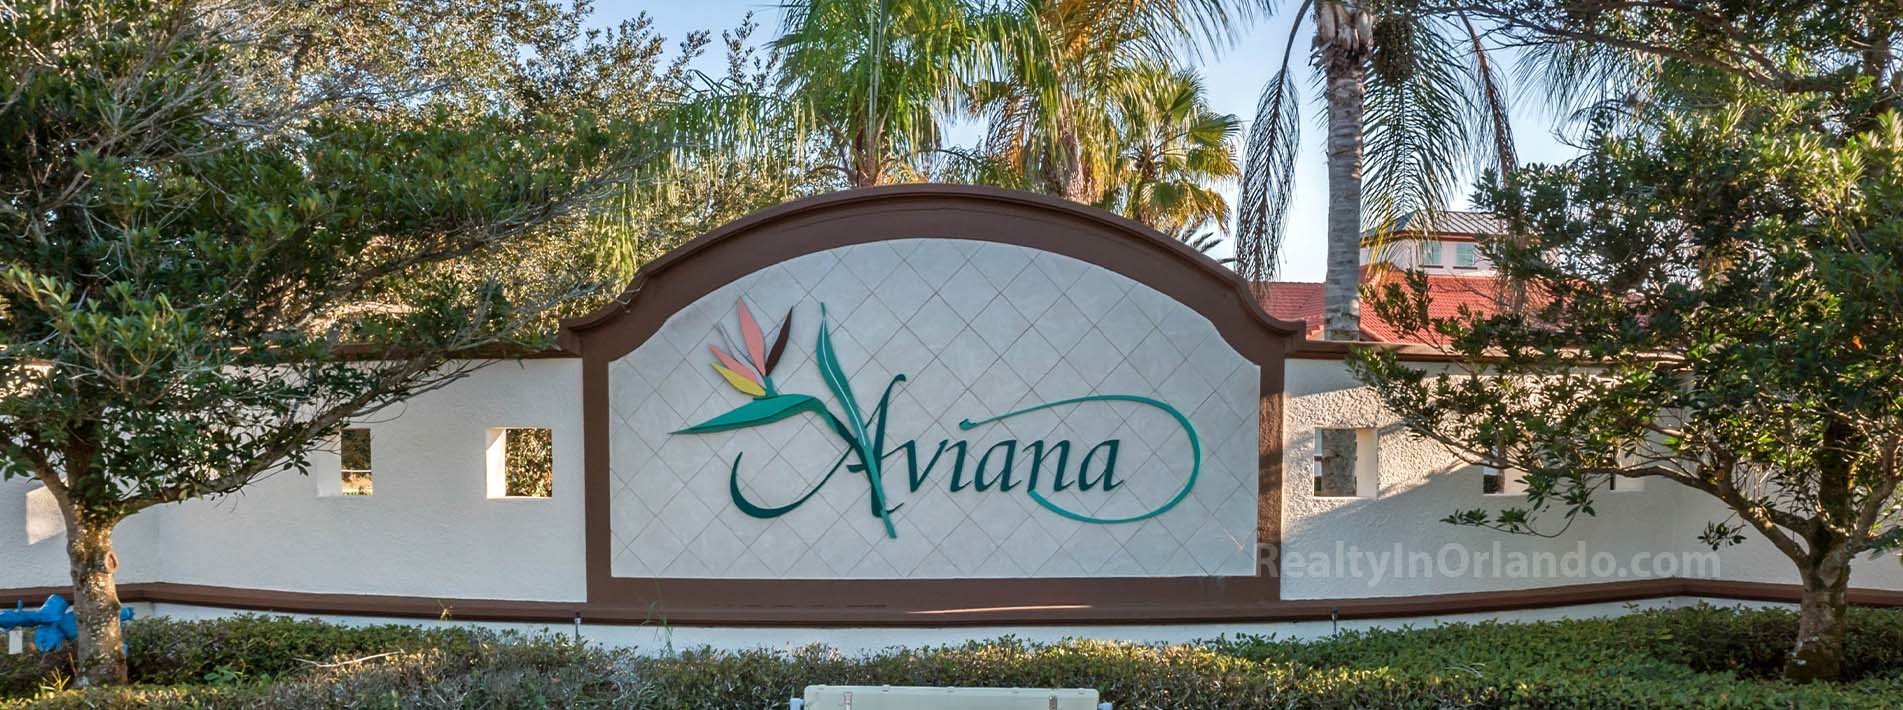 Aviana Resort Real Estate